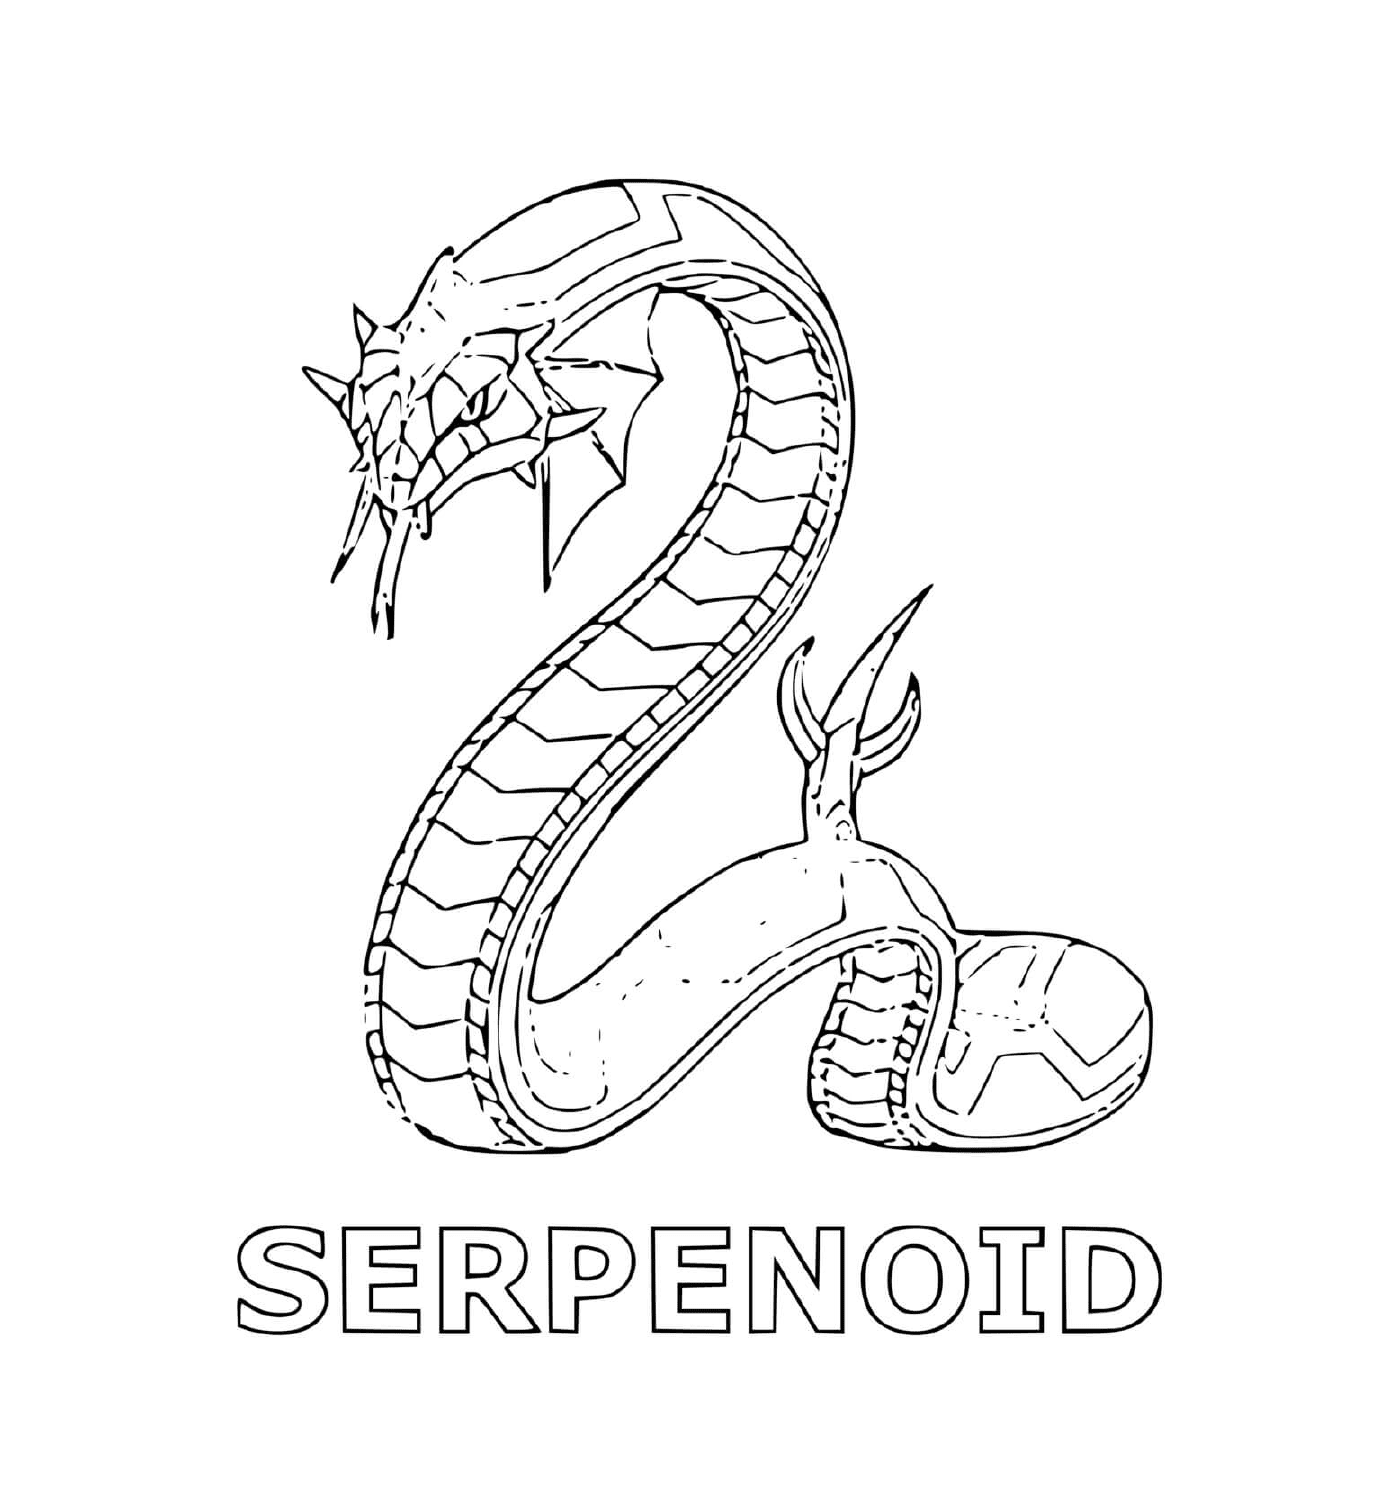 Serpenoid